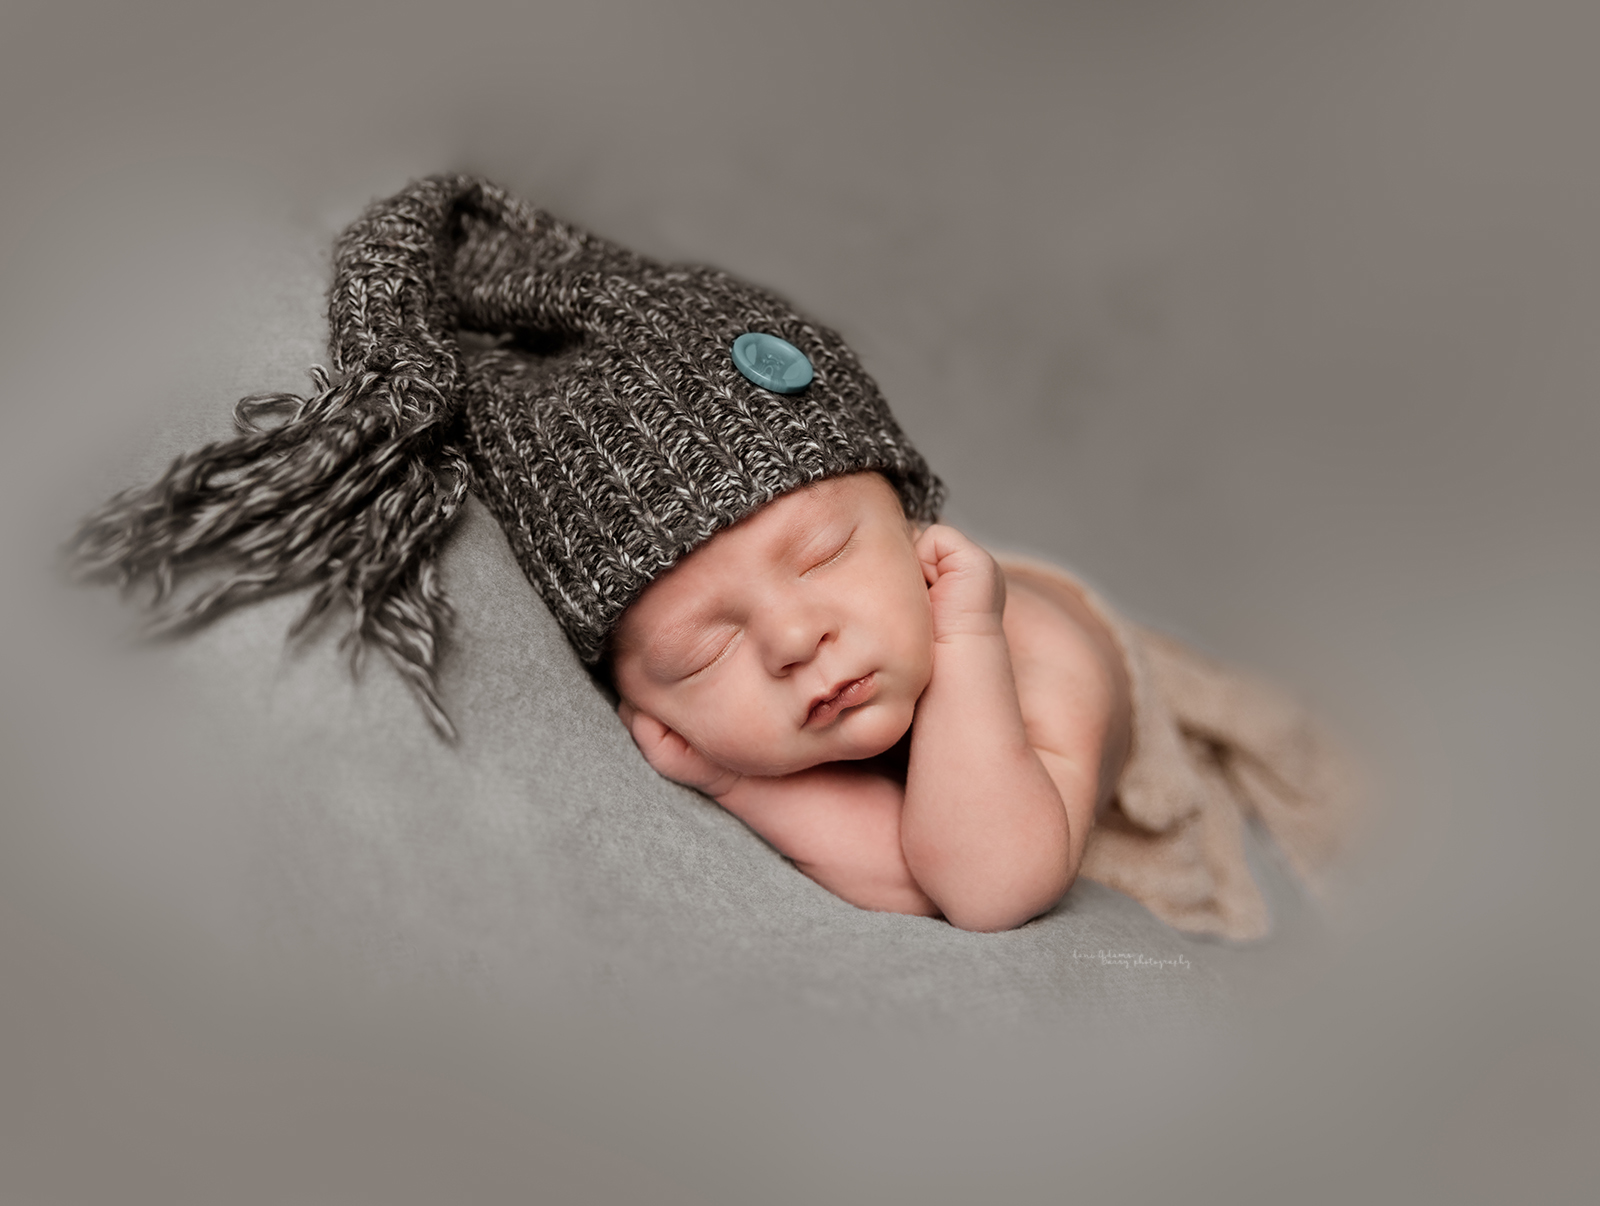 dani adams barry photography newborn photography dallas tx